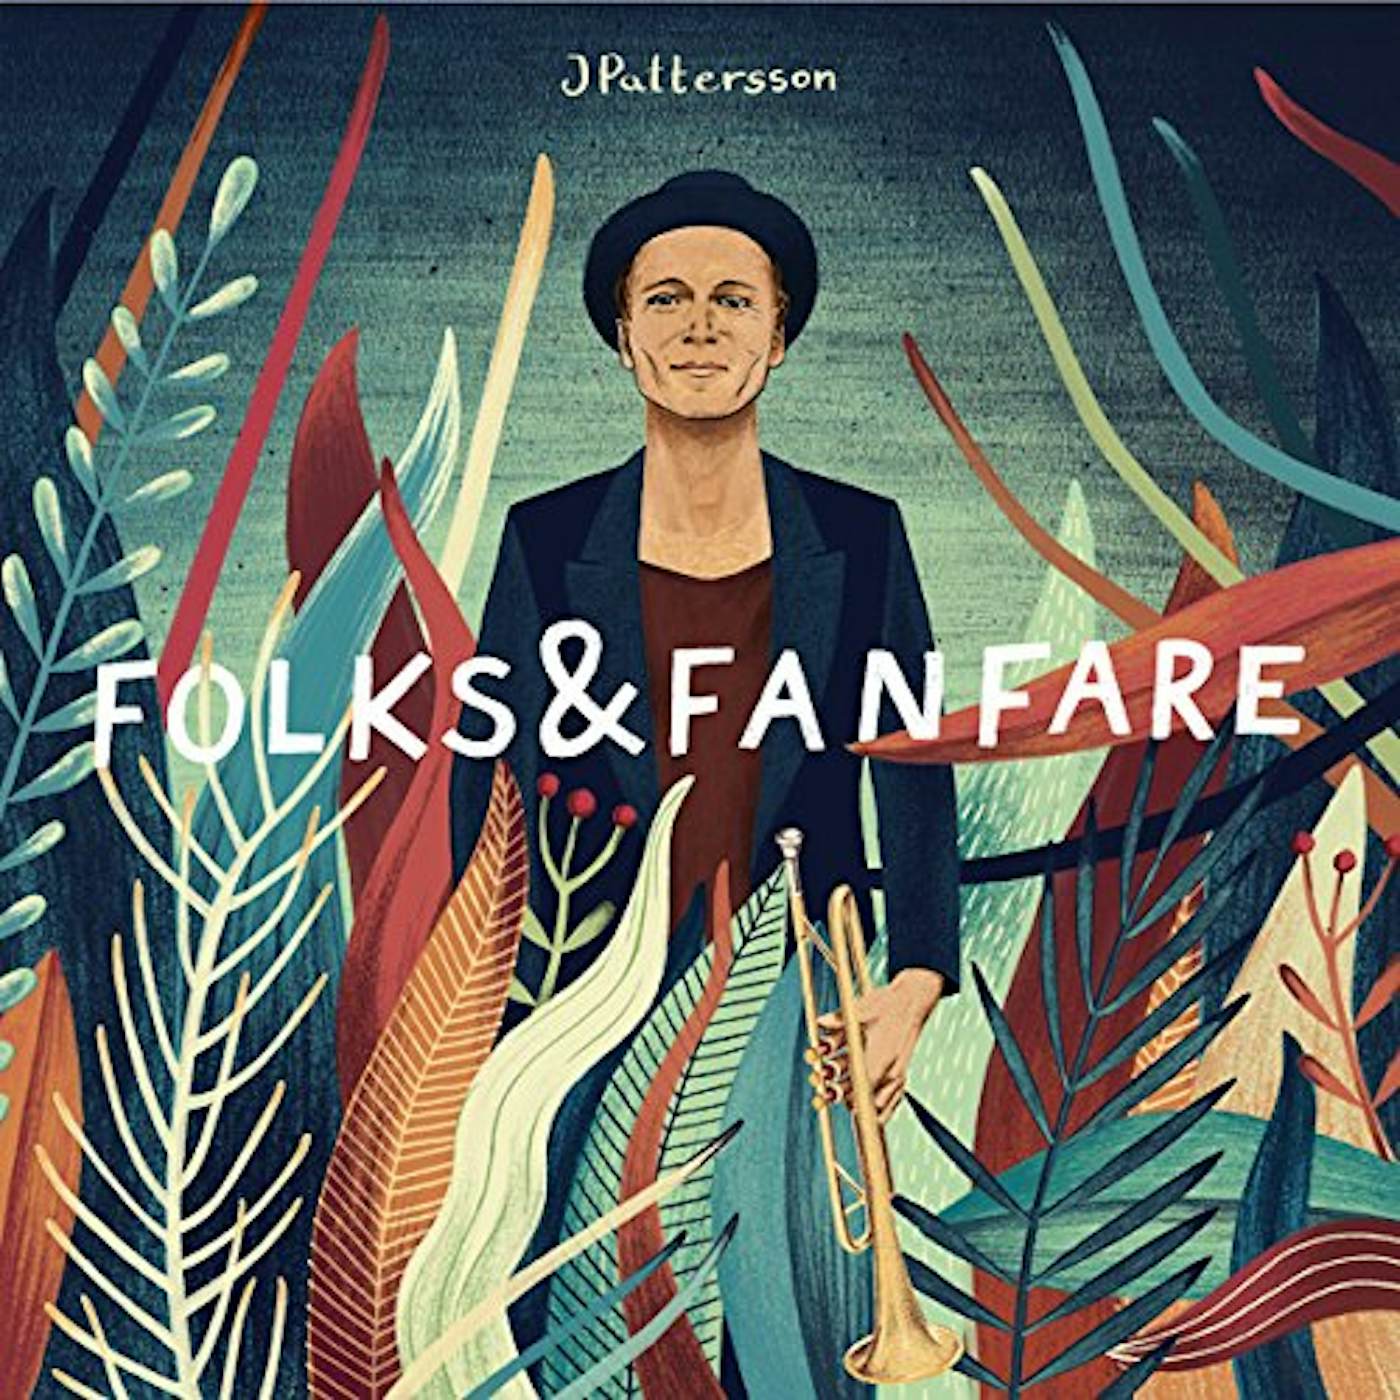 JPattersson Folks & Fanfare Vinyl Record